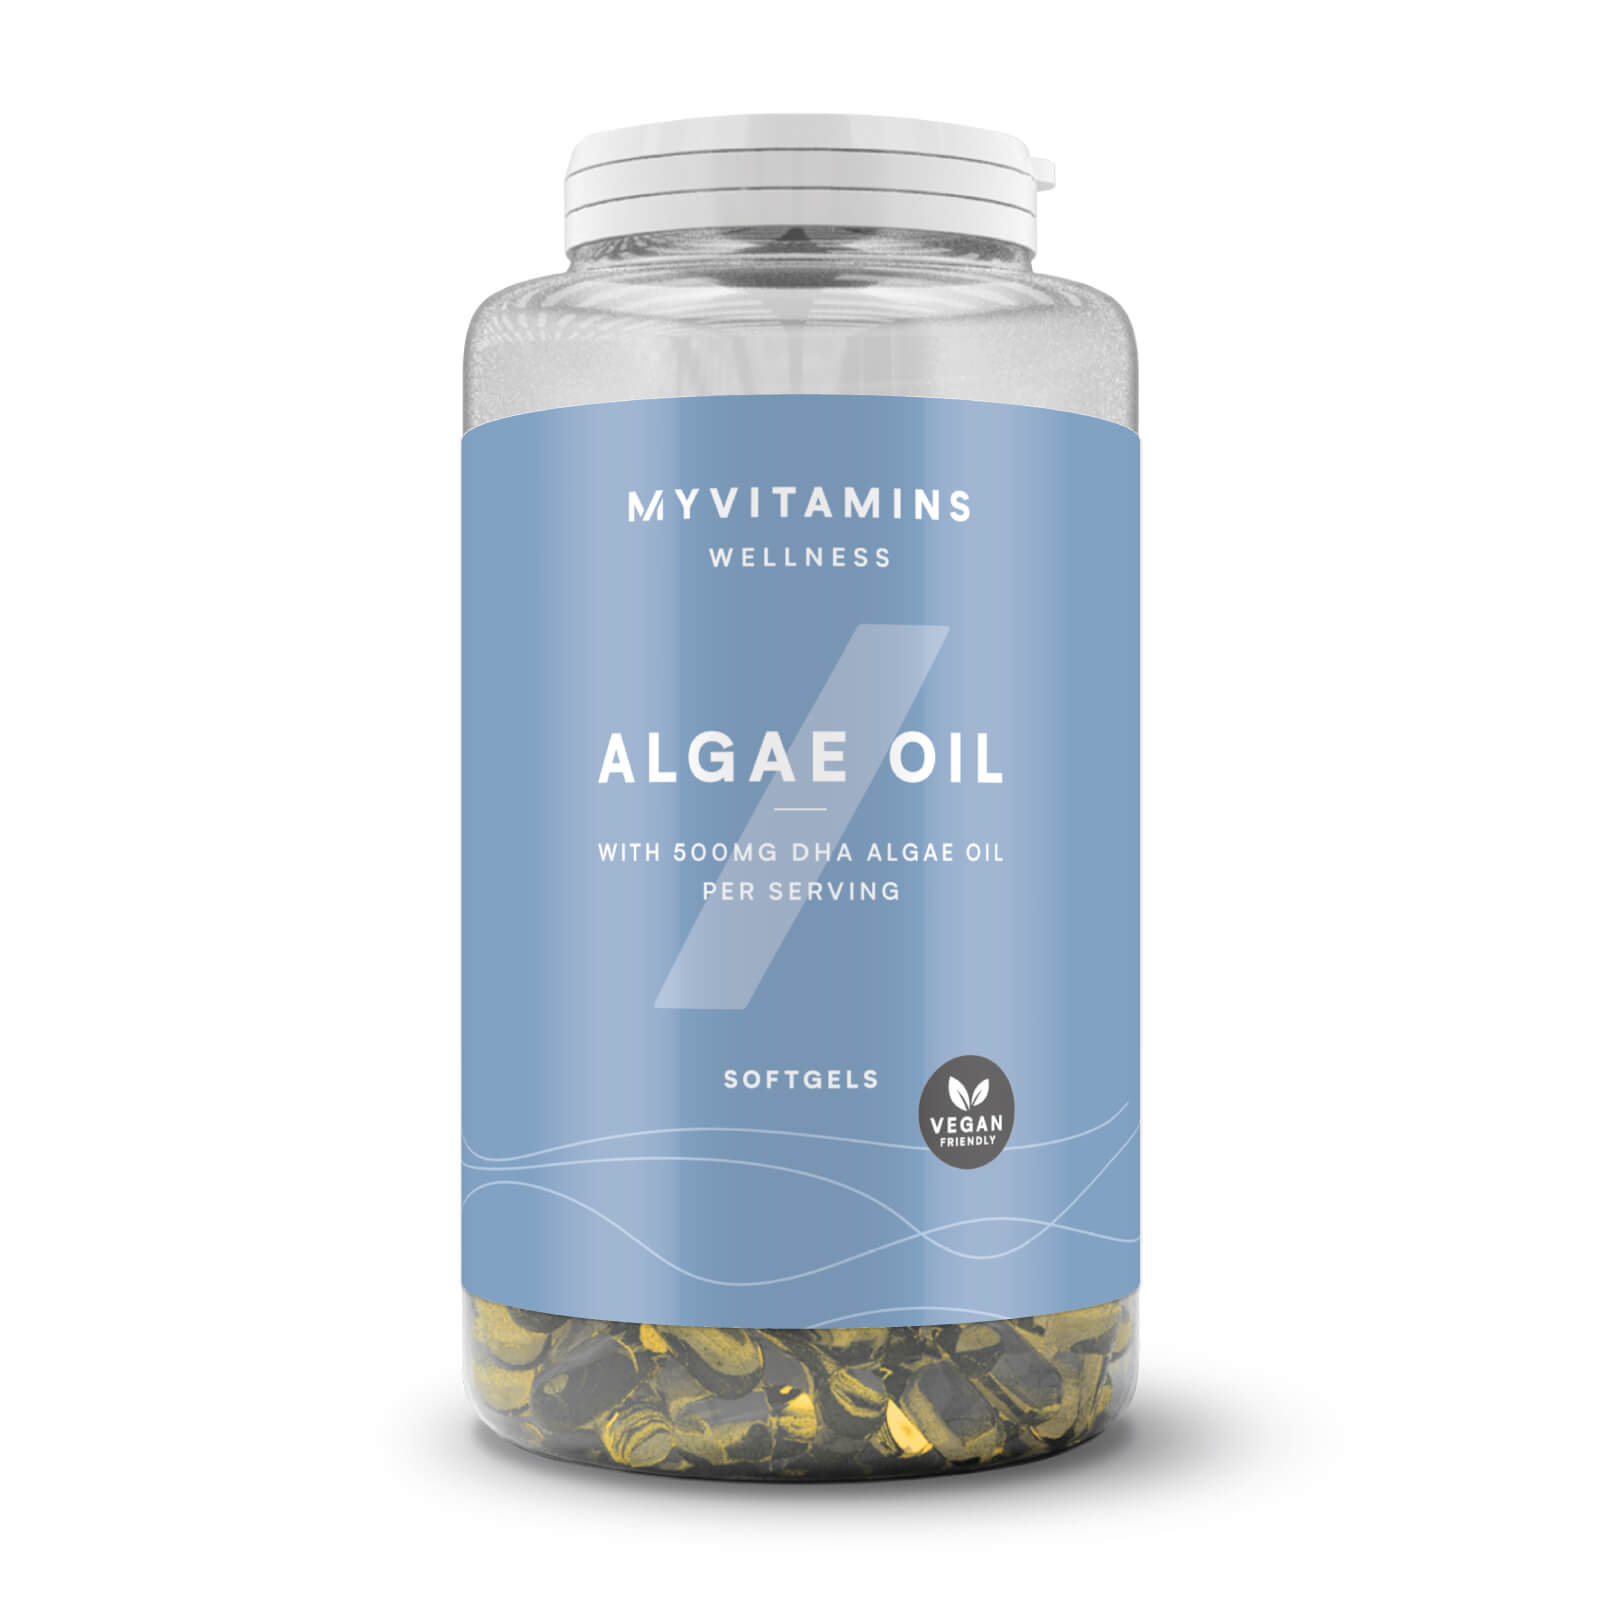 Myvitamins Algae Oil - 90Softgels